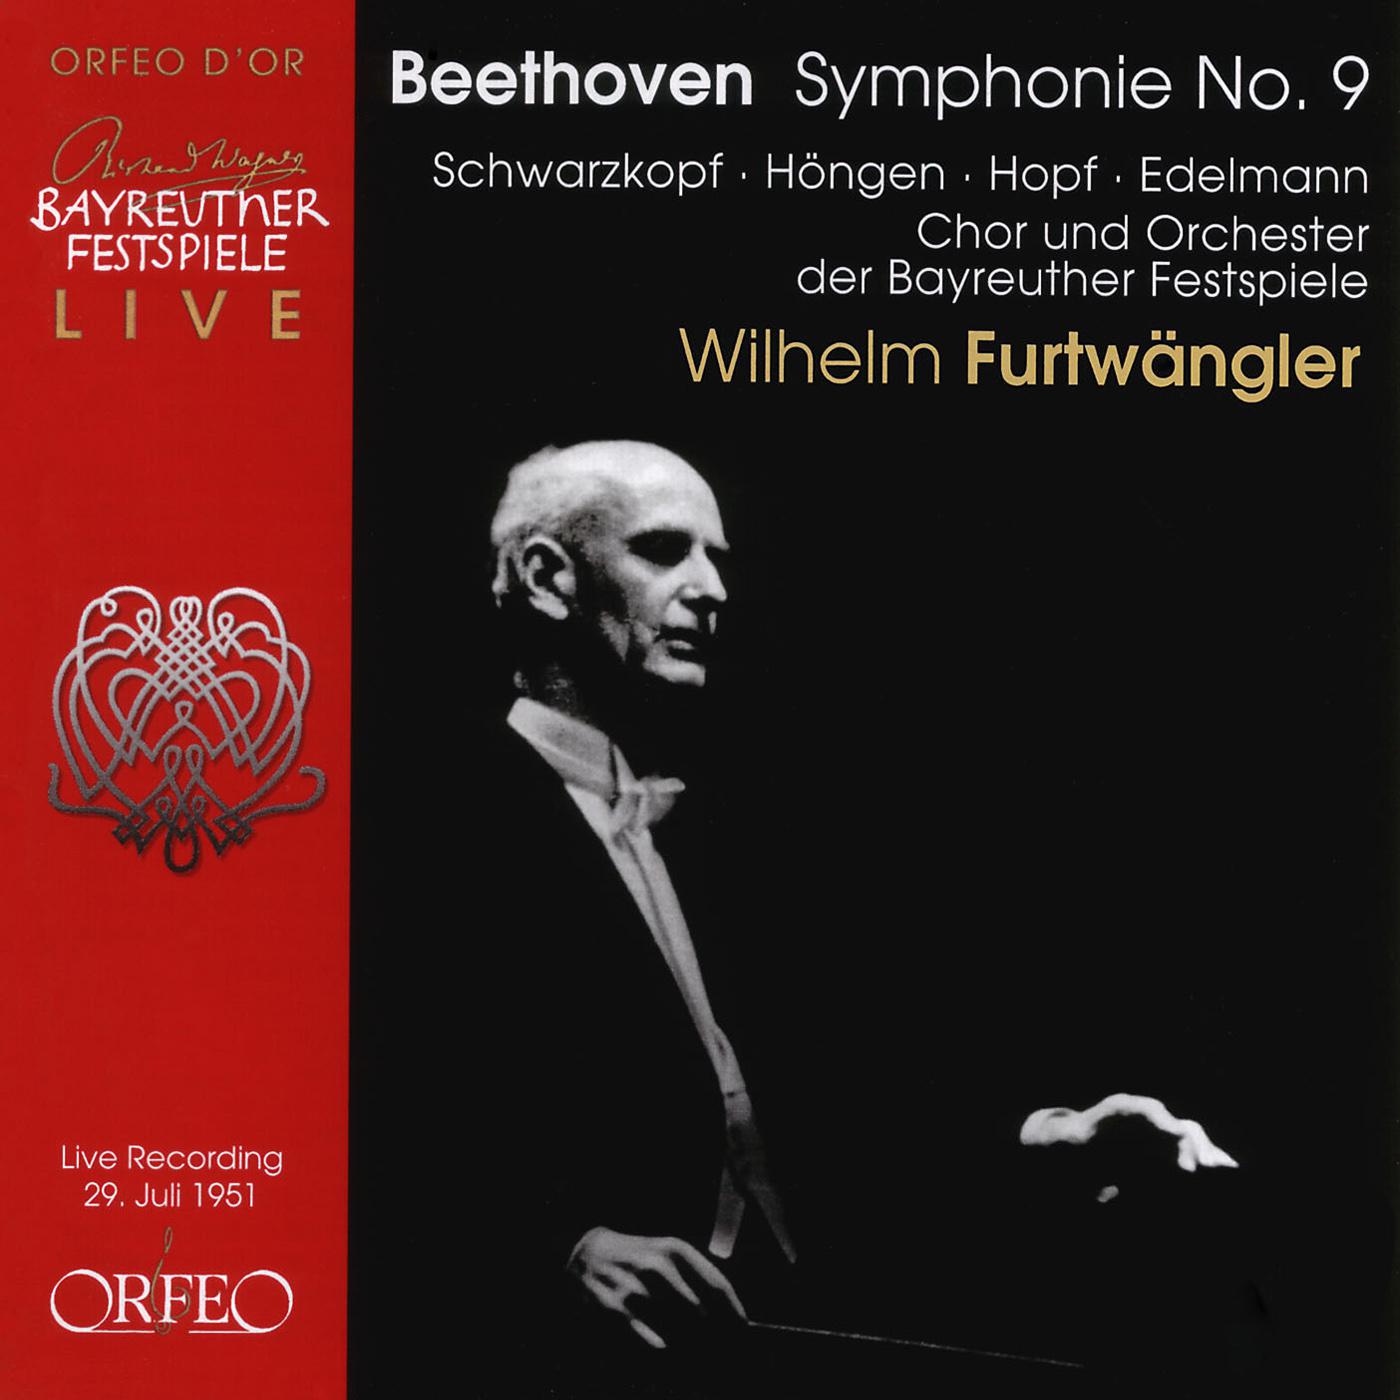 BEETHOVEN, L.: Symphony No. 9, " Choral" Schwarzkopf, H ngen, Hopf, Edelmann, Bayreuth Festival Chorus and Orchestra, Furtw ngler 1951